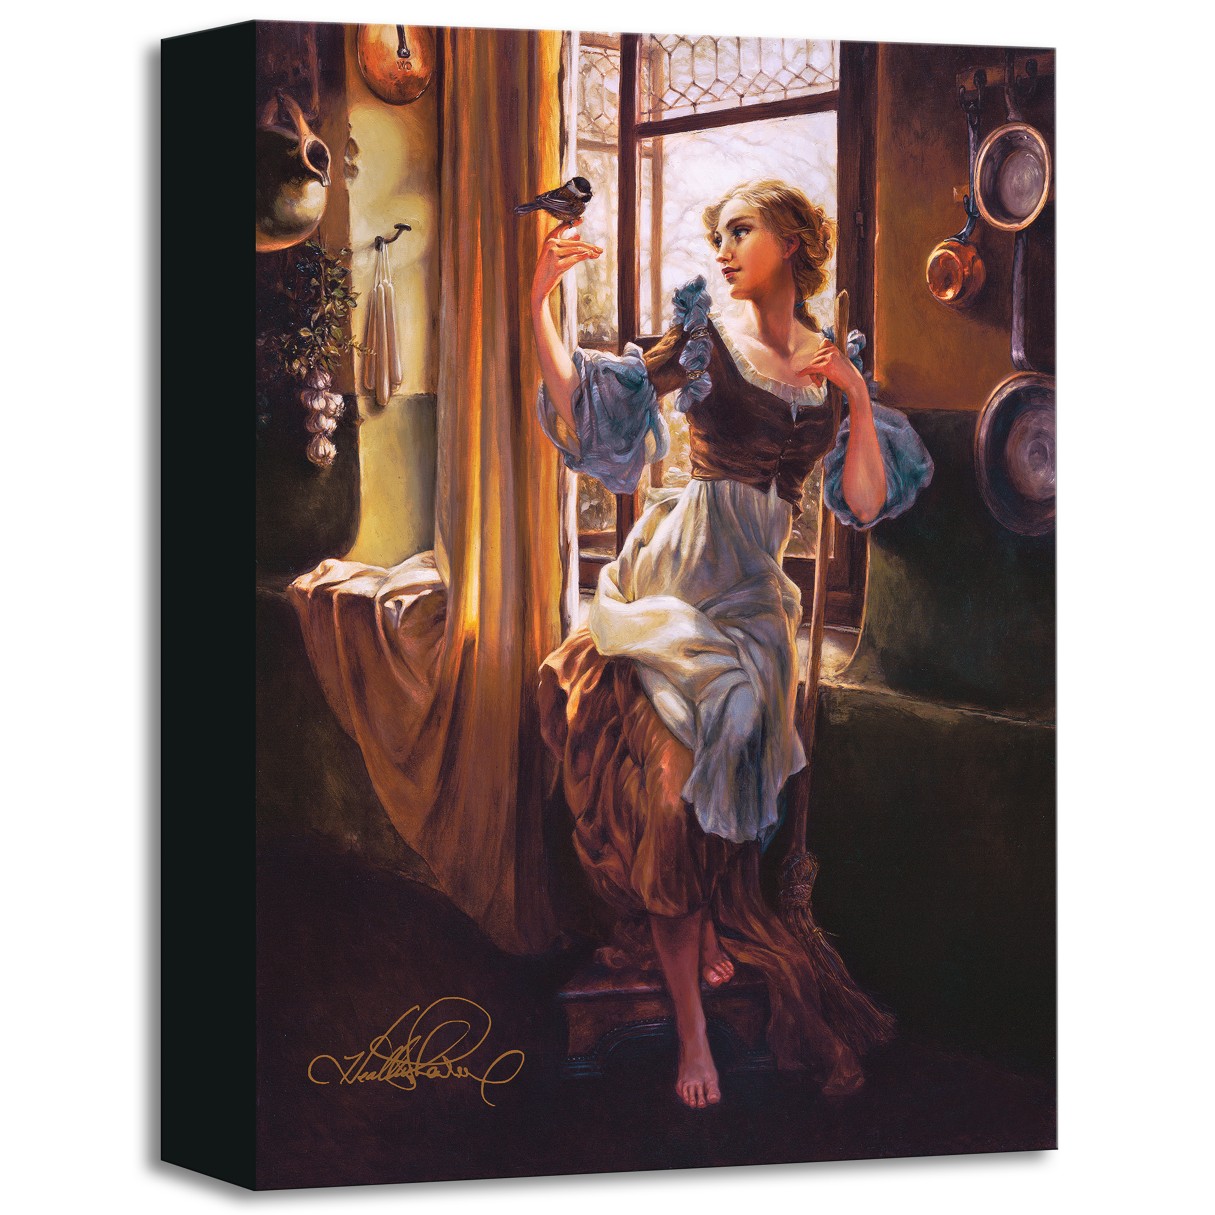 ''Cinderella's New Day'' Giclée on Canvas by Heather Edwards